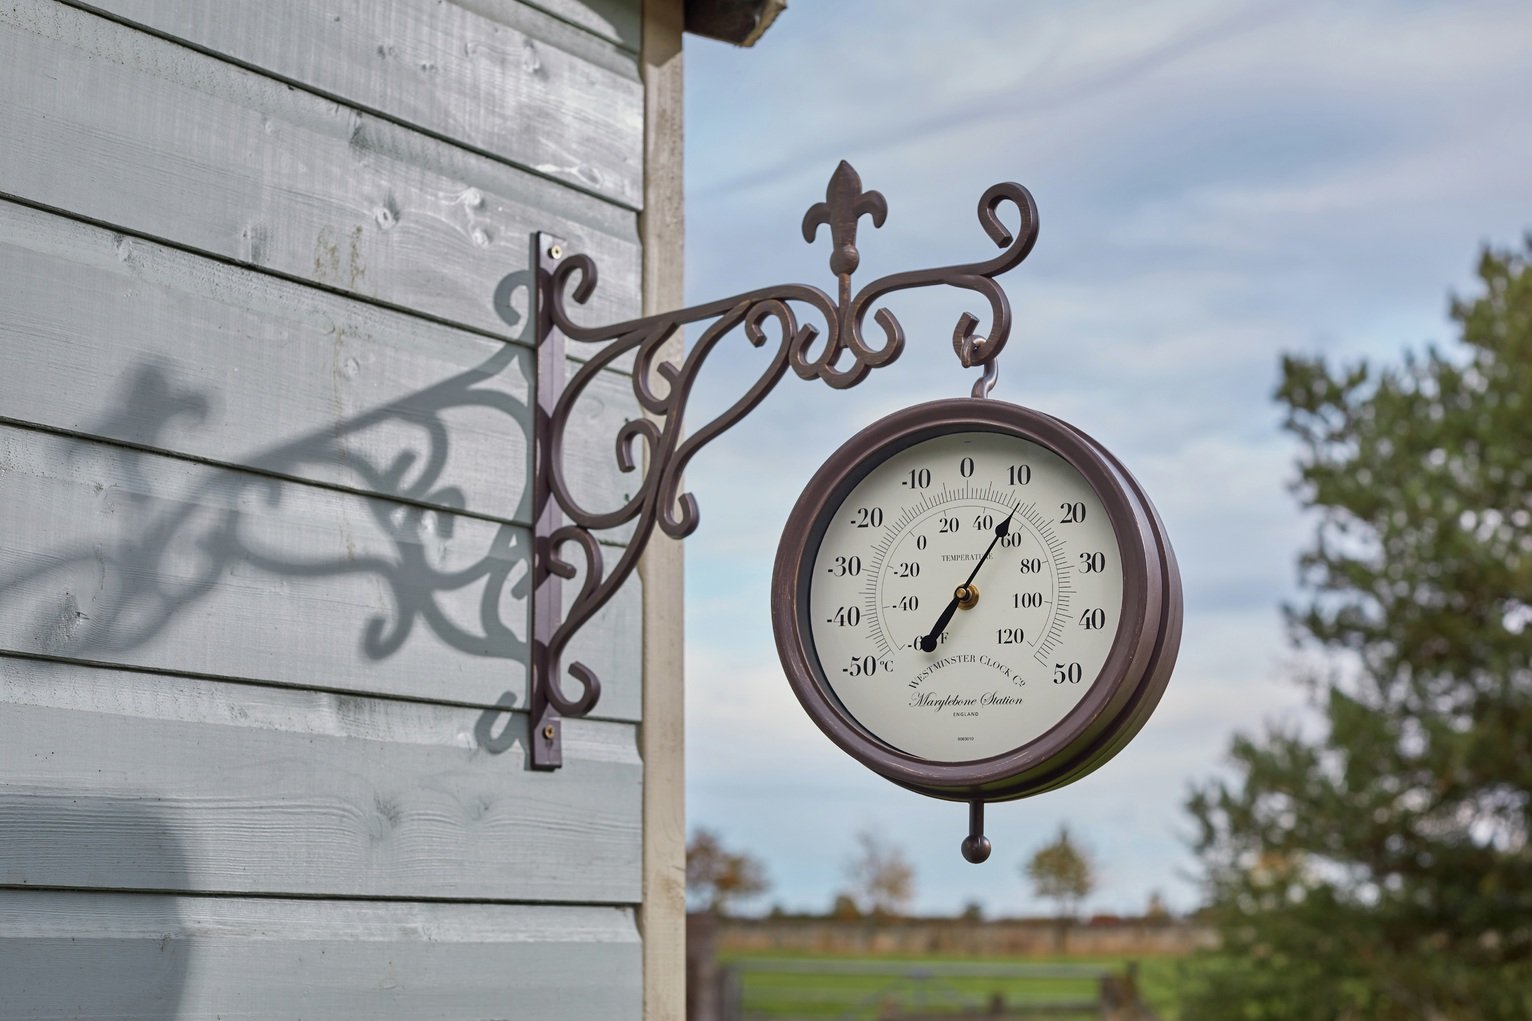 Smart Garden Traditional Garden Wall Clock